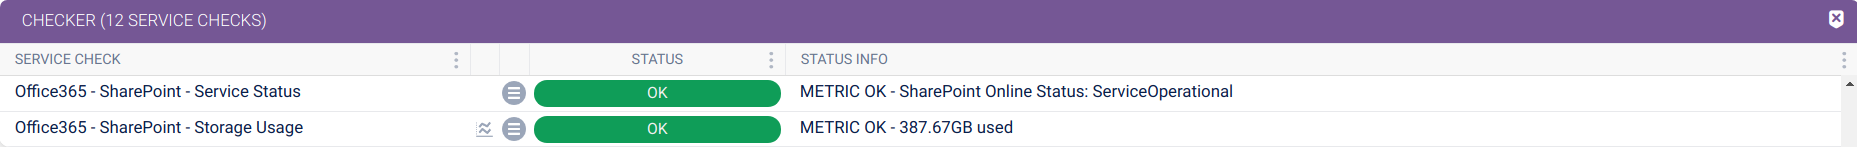 Office 365 SharePoint Service Checks